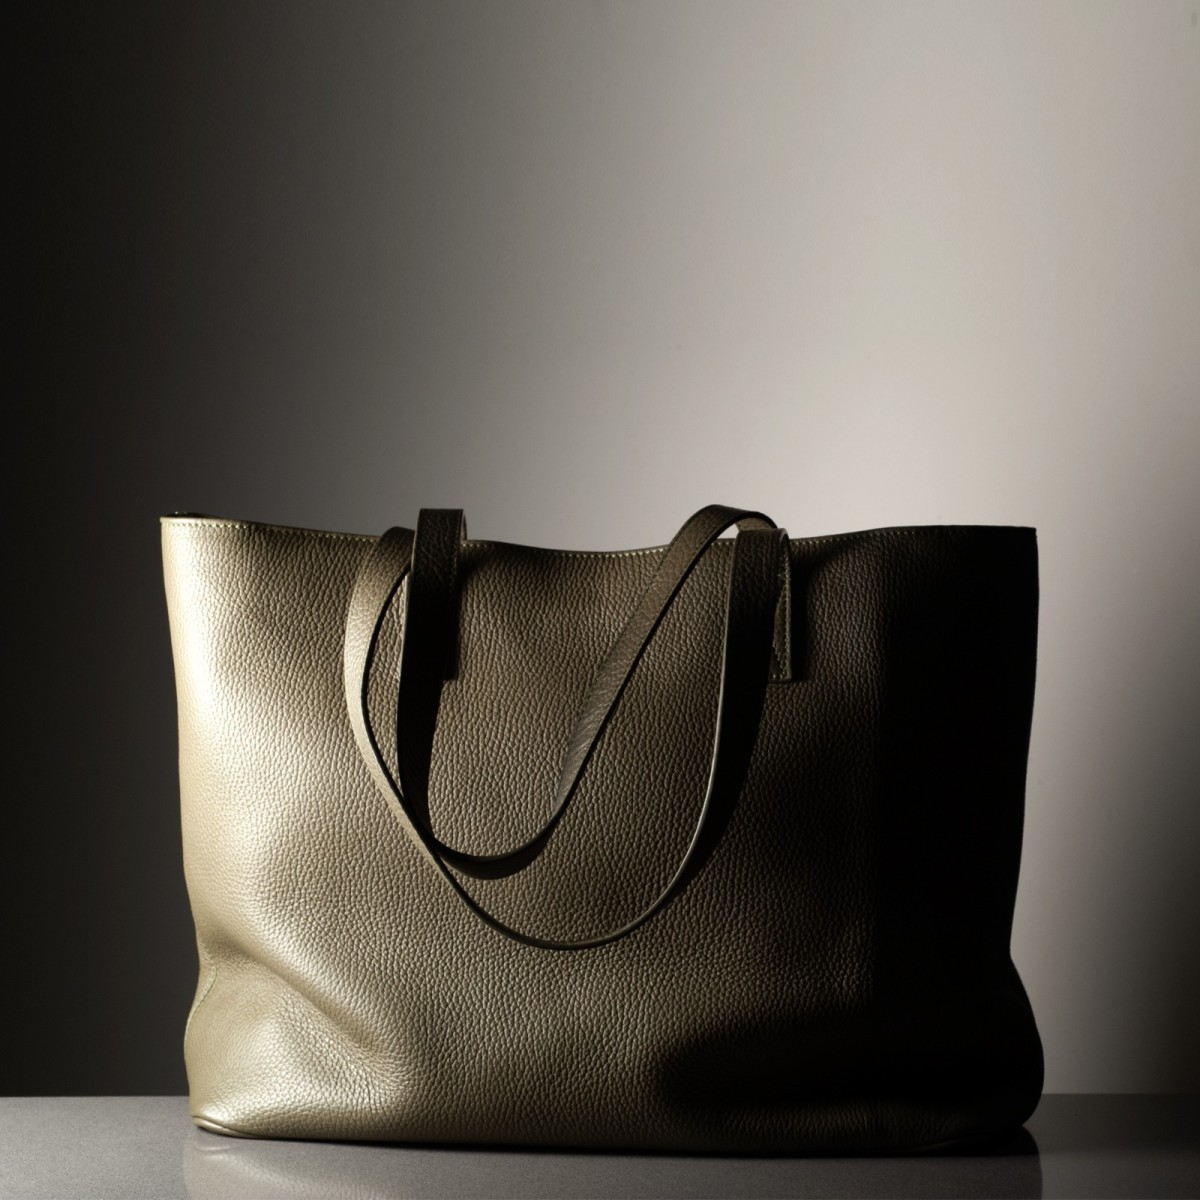 PETRA - Bull leather bag, handmade in Italy